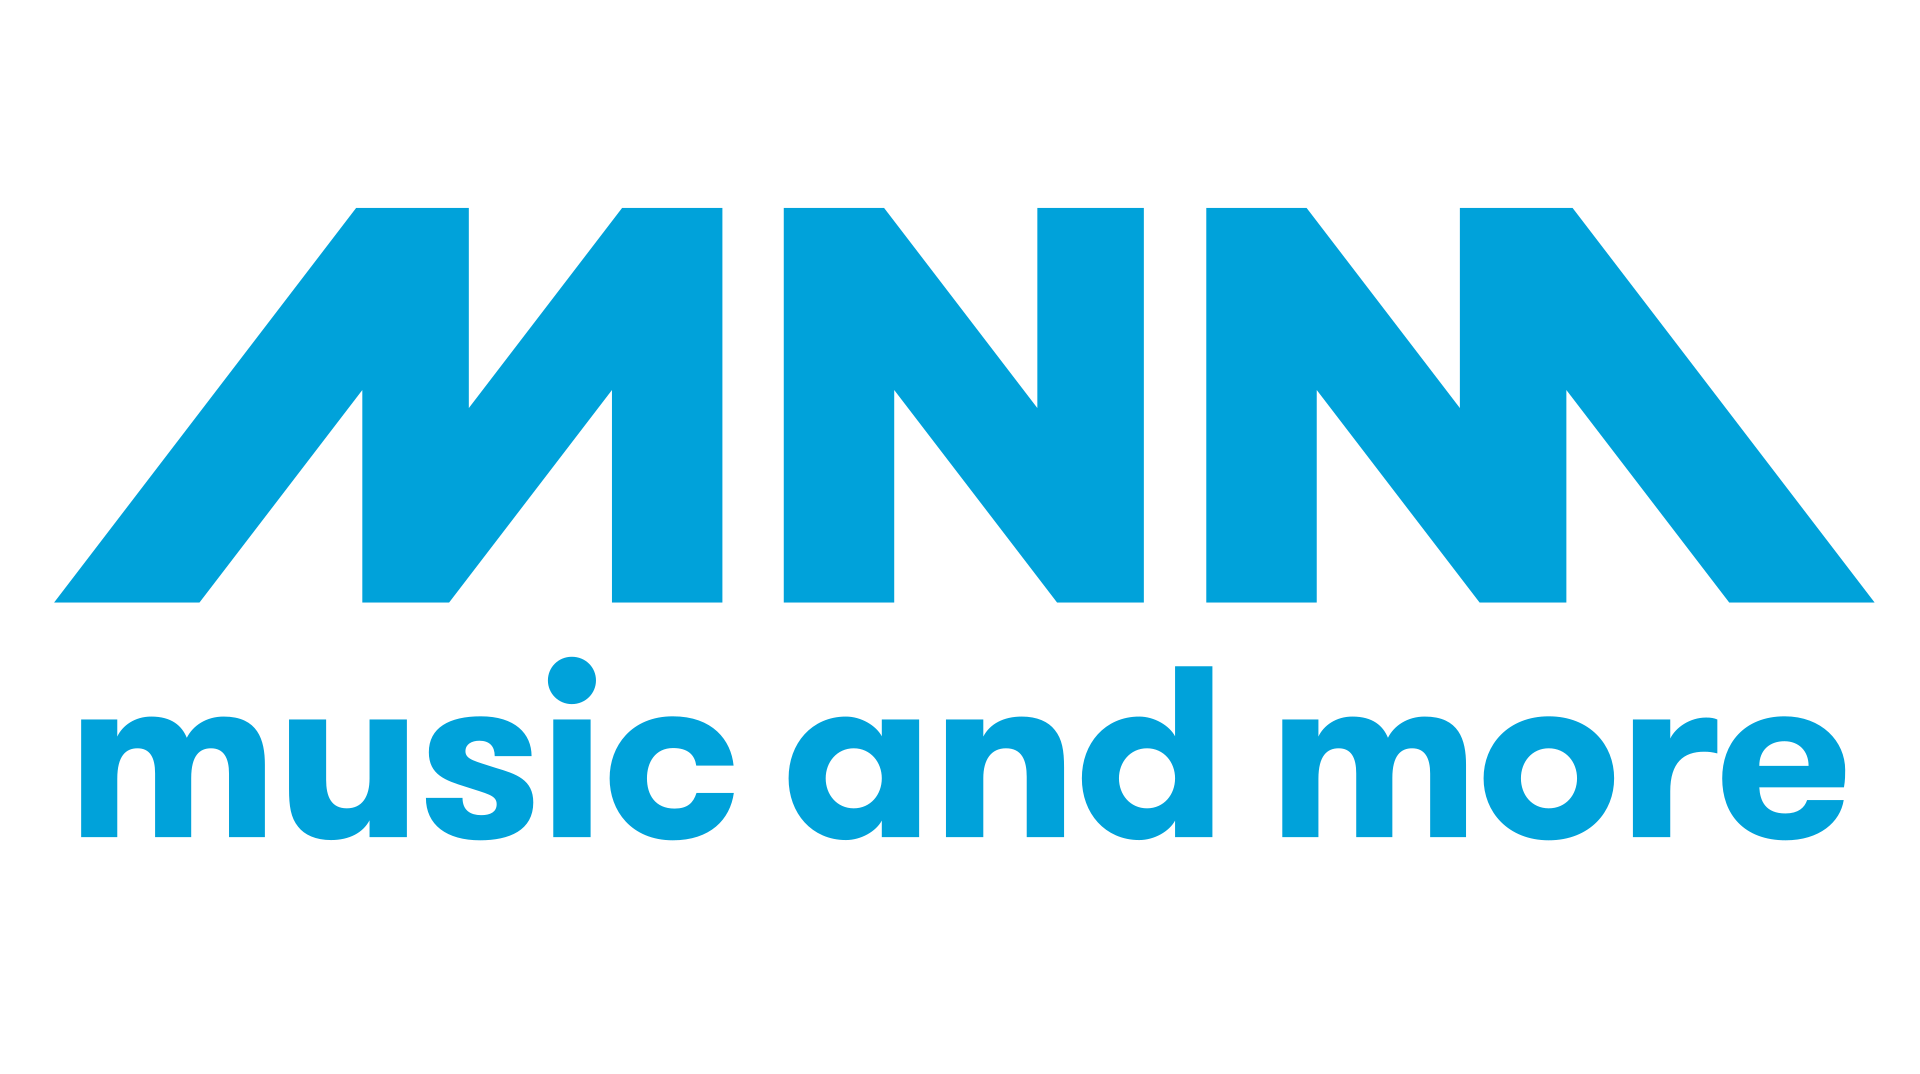 MNM Radio